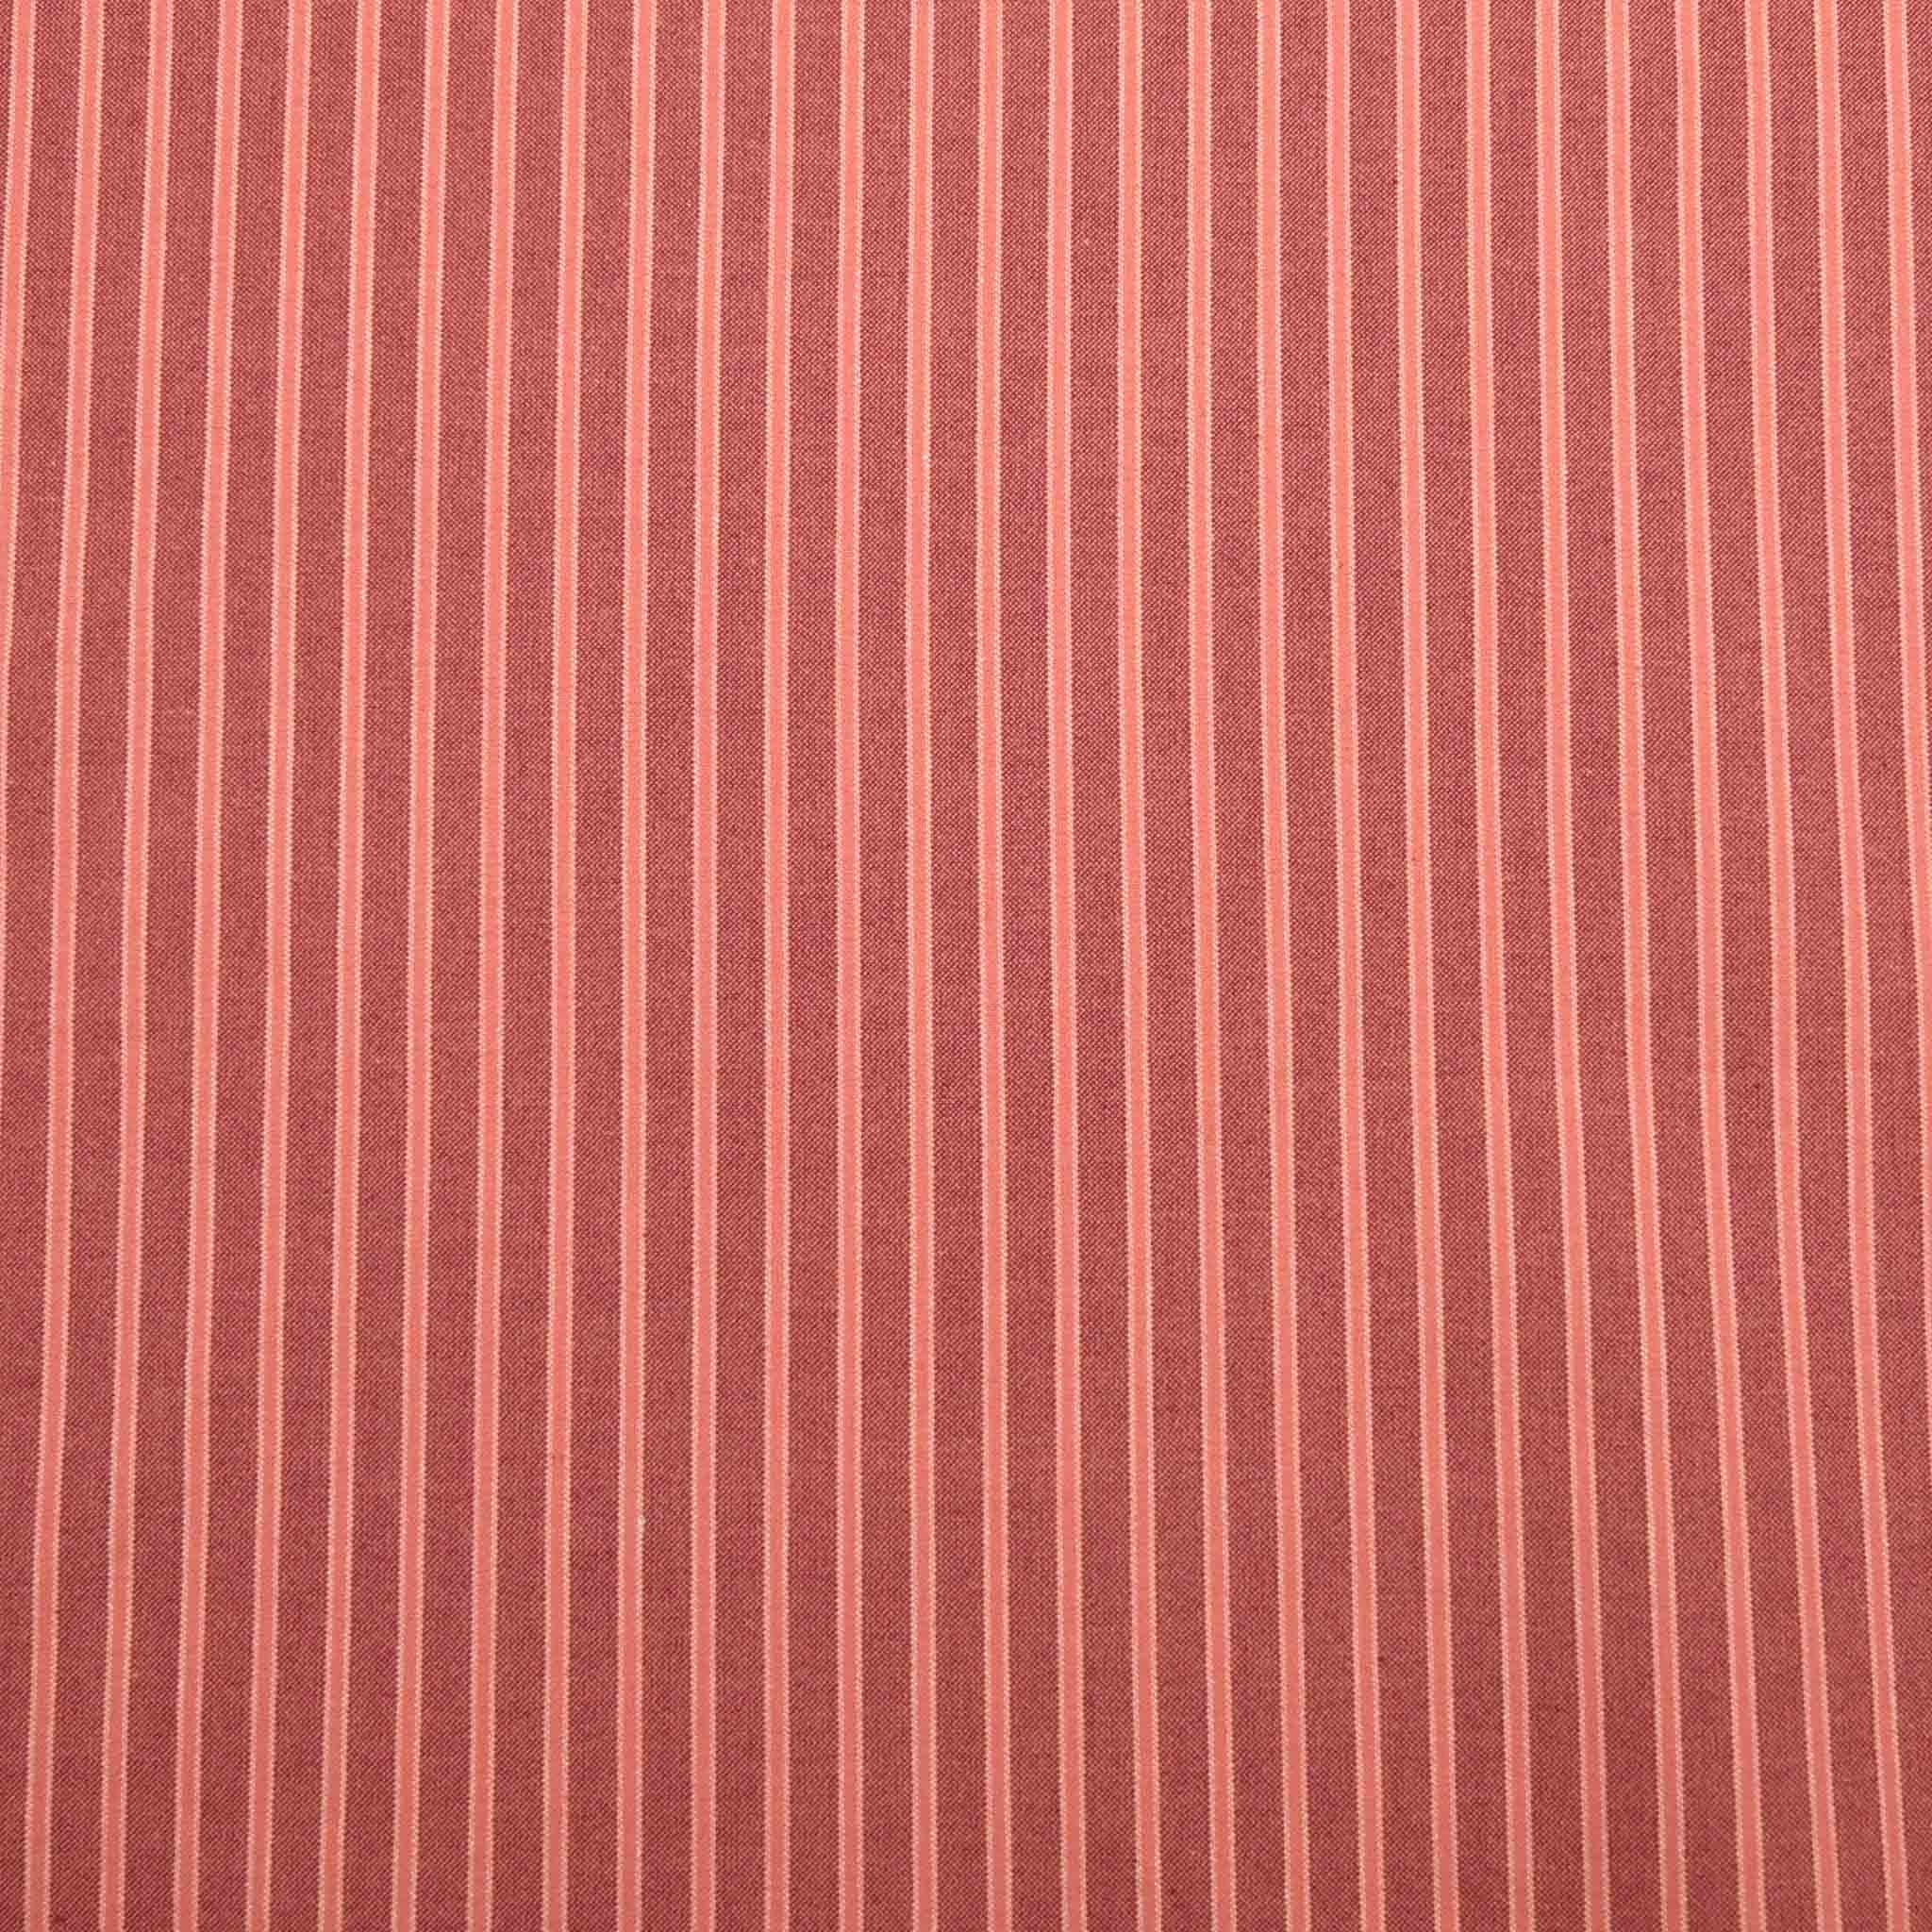 Pink Stripes Stretch Cotton Fabric 98659